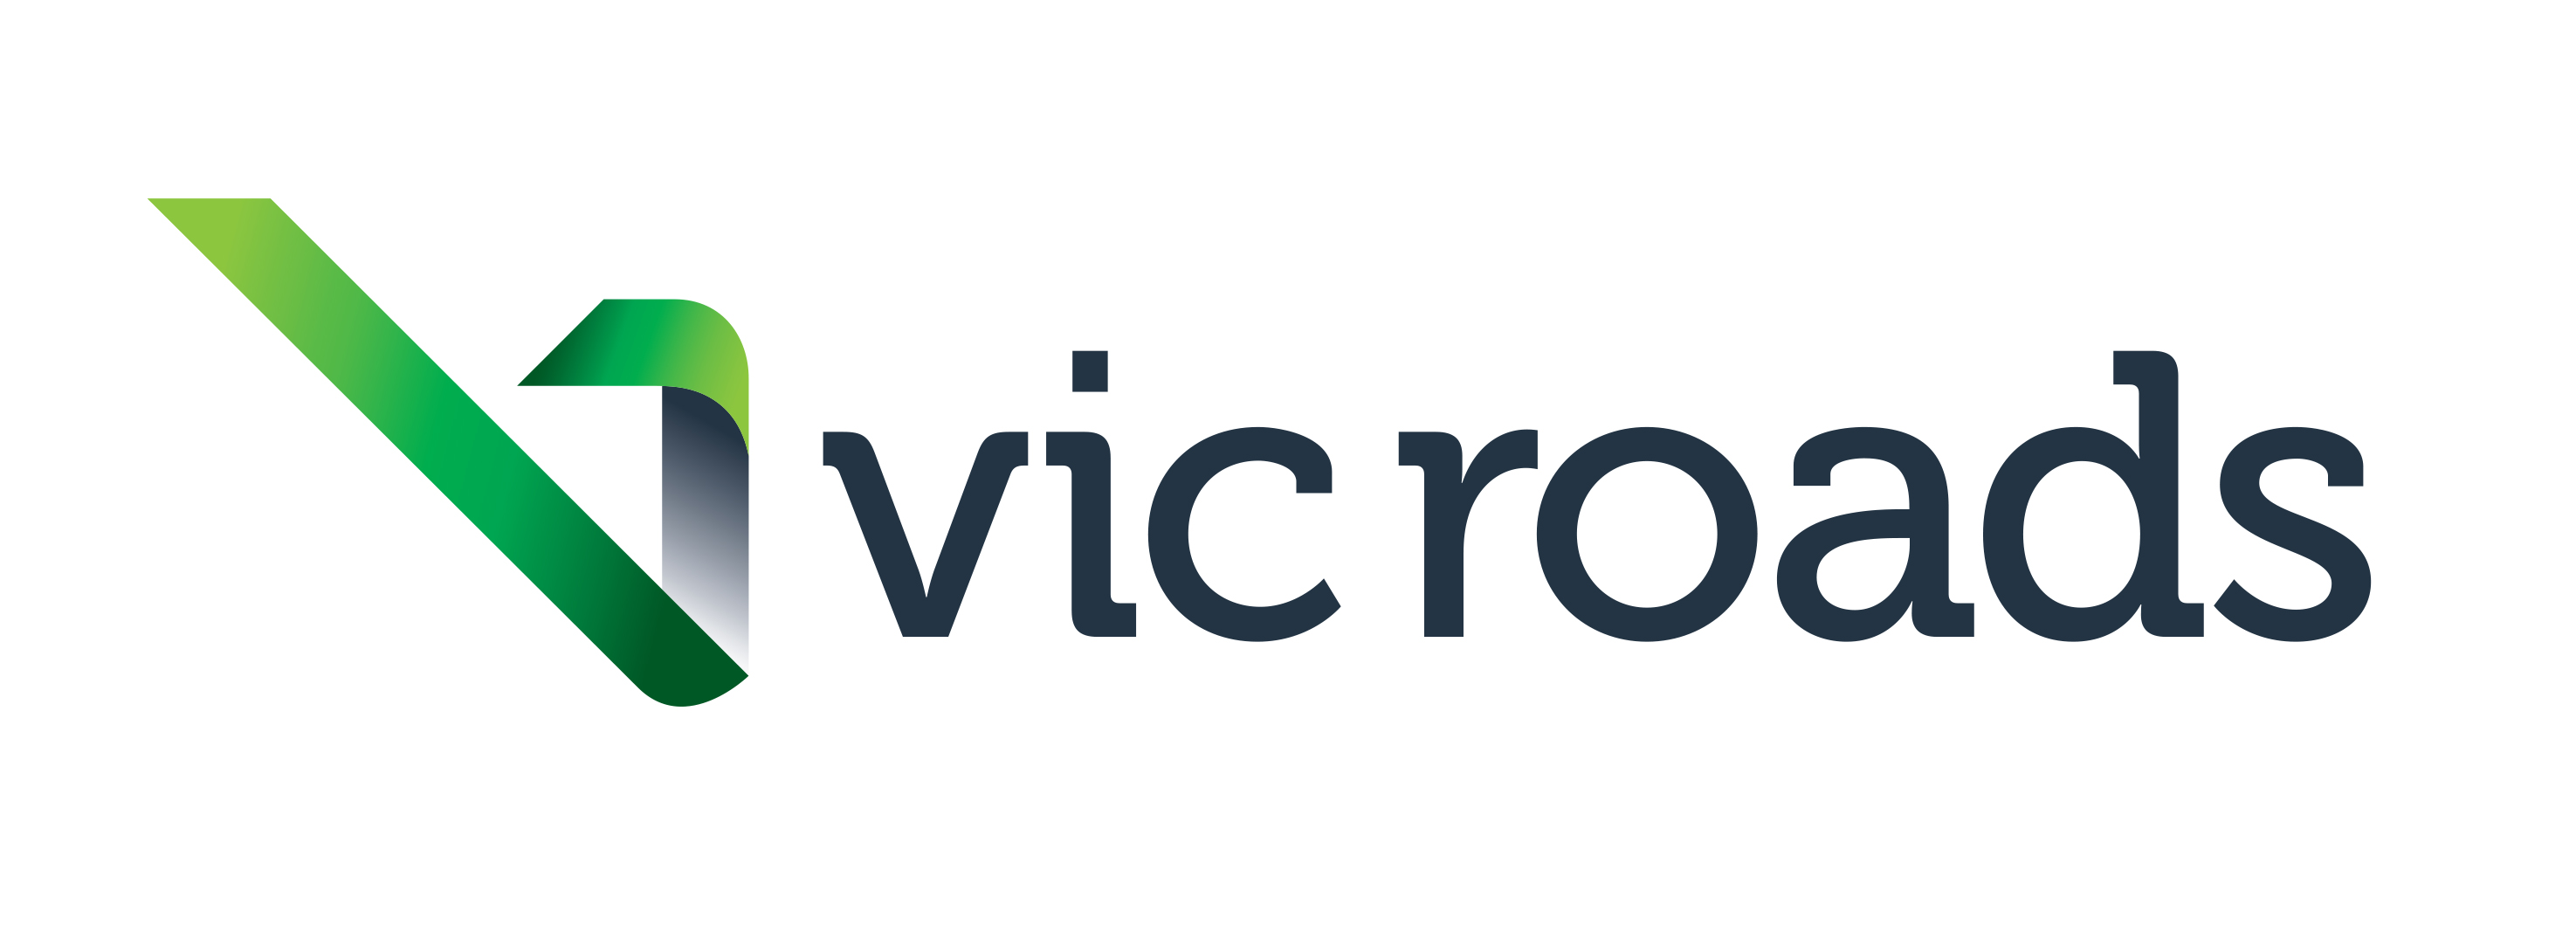 vicroads logo